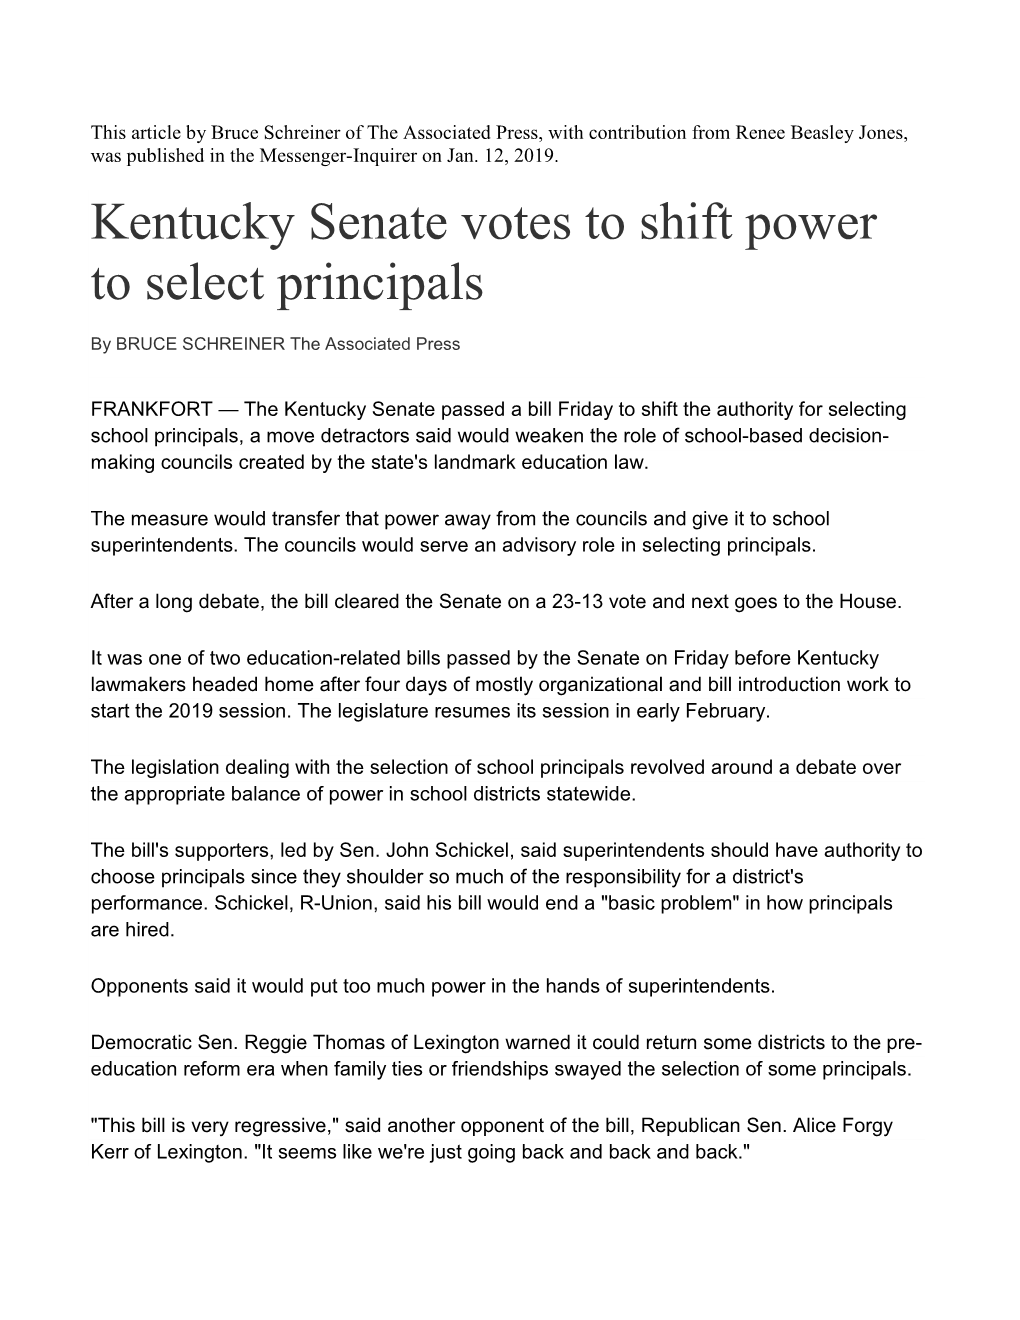 Kentucky Senate Votes to Shift Power to Select Principals